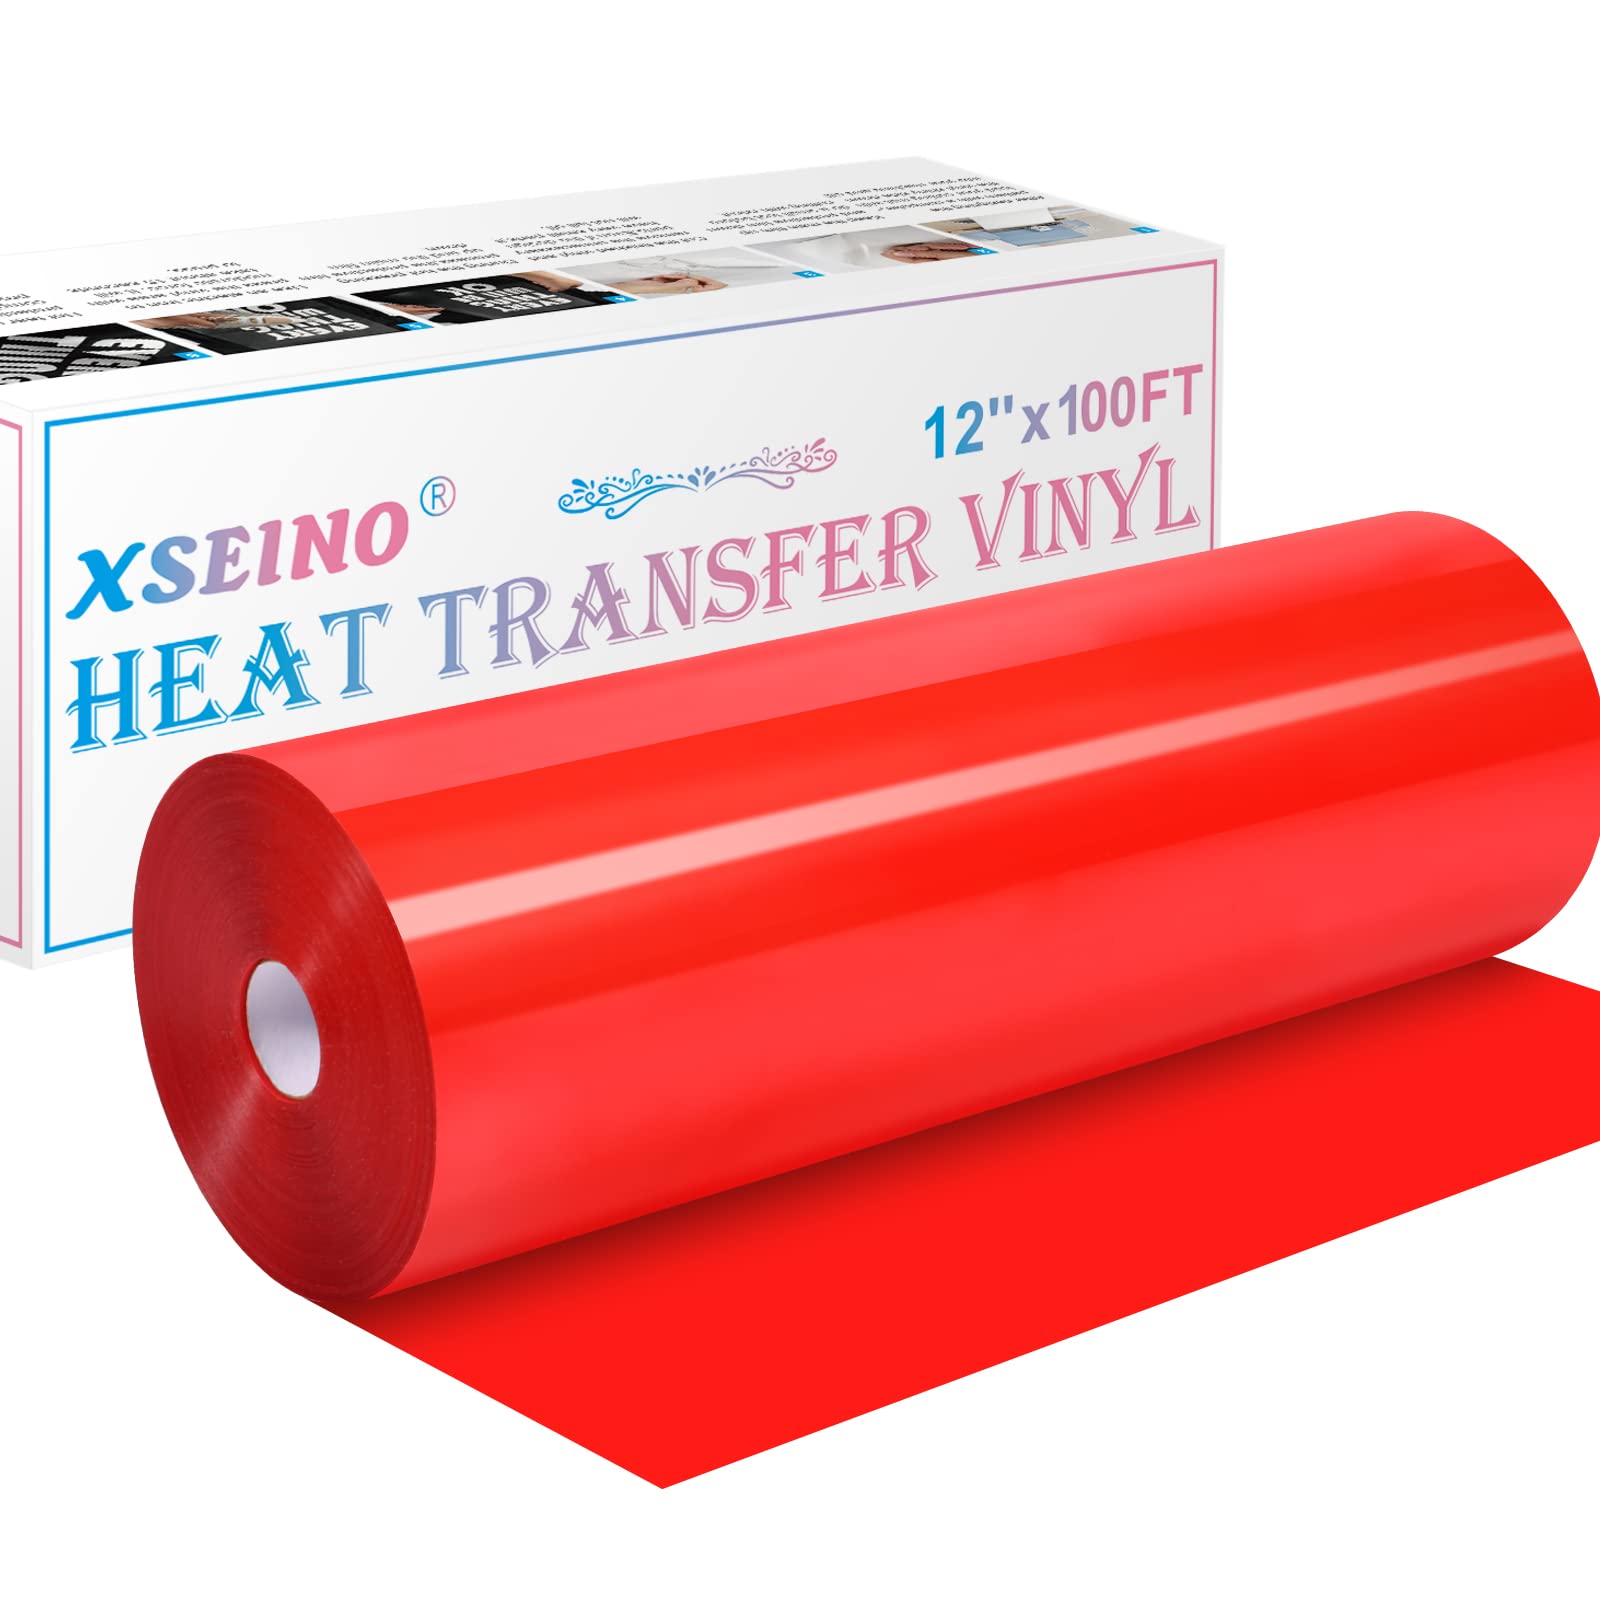 XSEINO Heat Transfer Vinyl Roll,12 x 100FT Red HTV Vinyl Roll